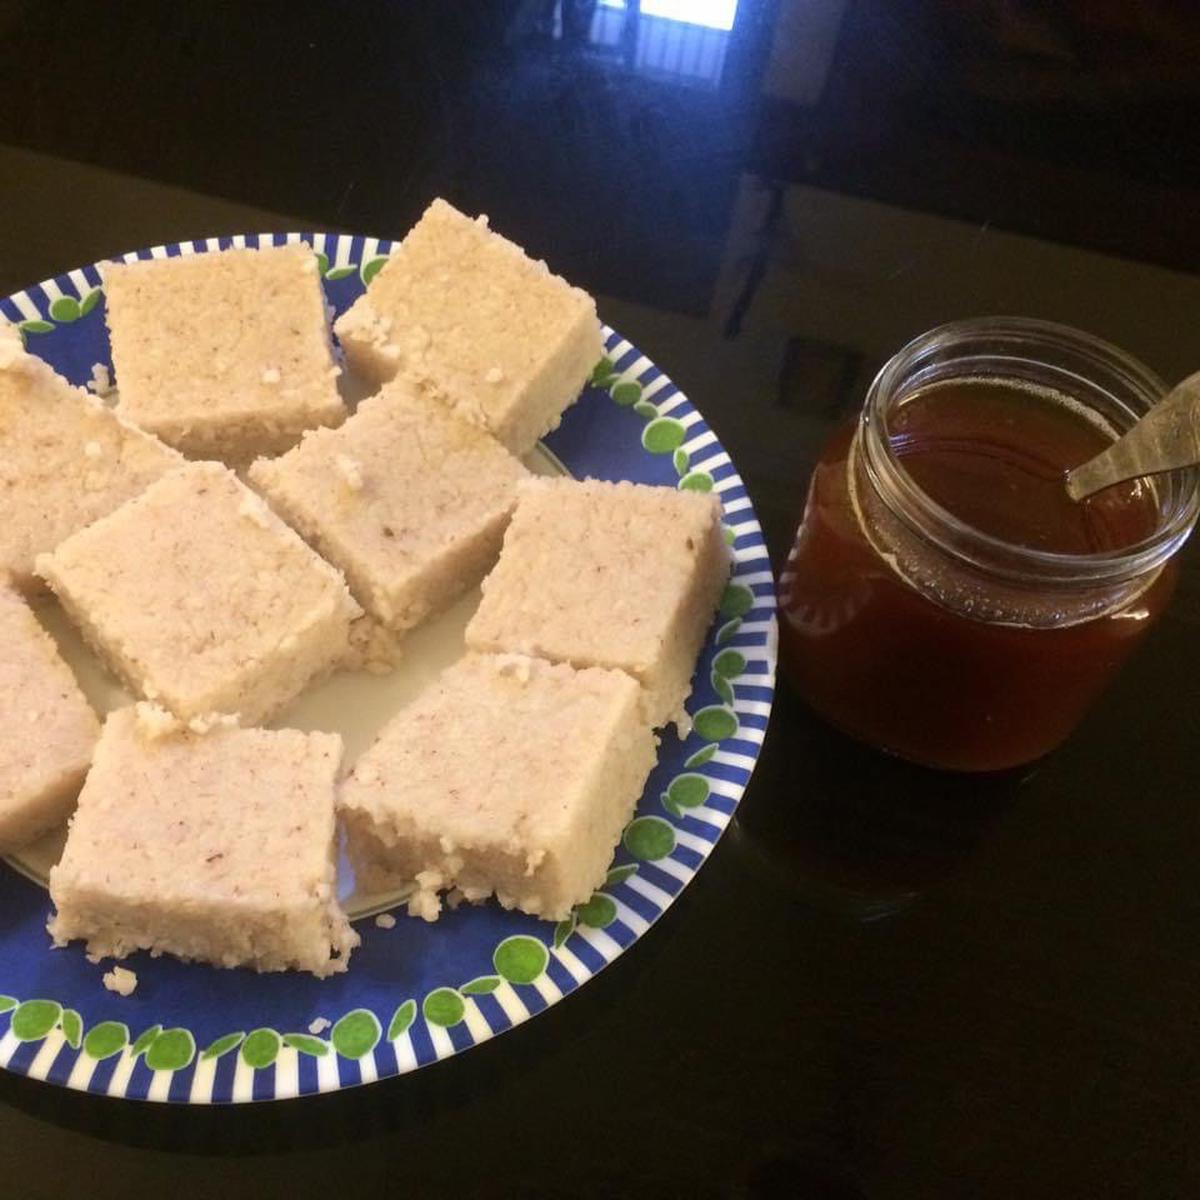 Vishu katta served with jaggery syrup